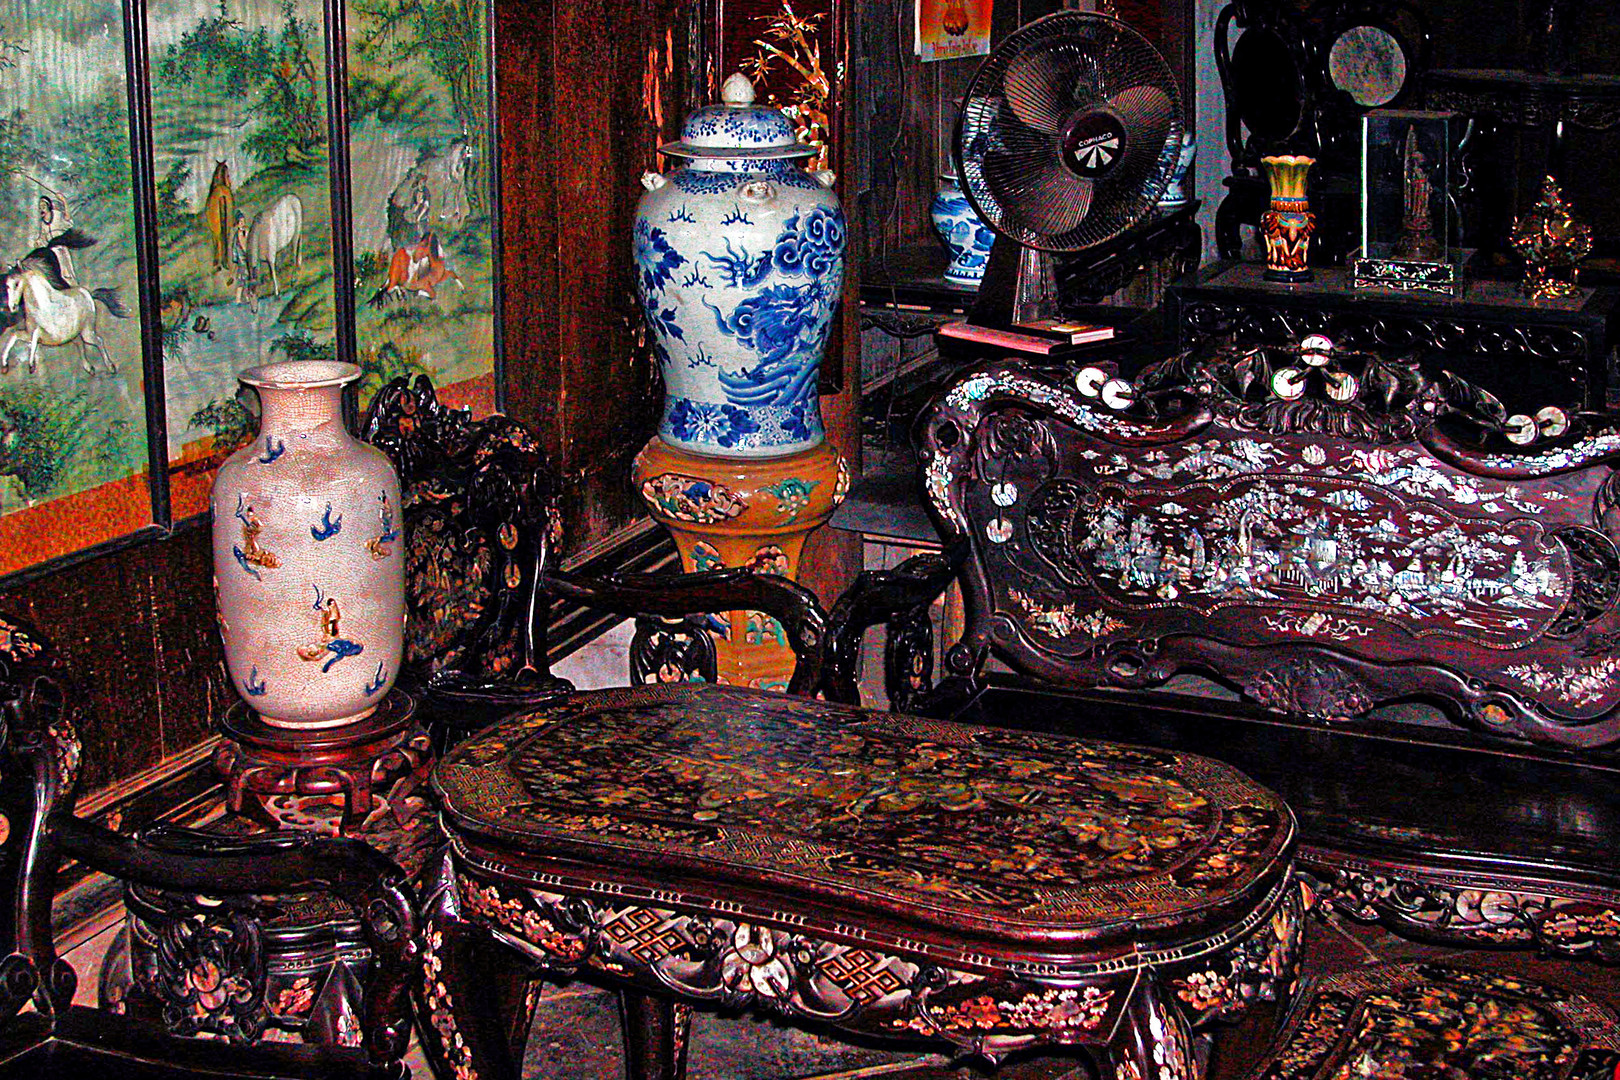 Inside Phung Hung House